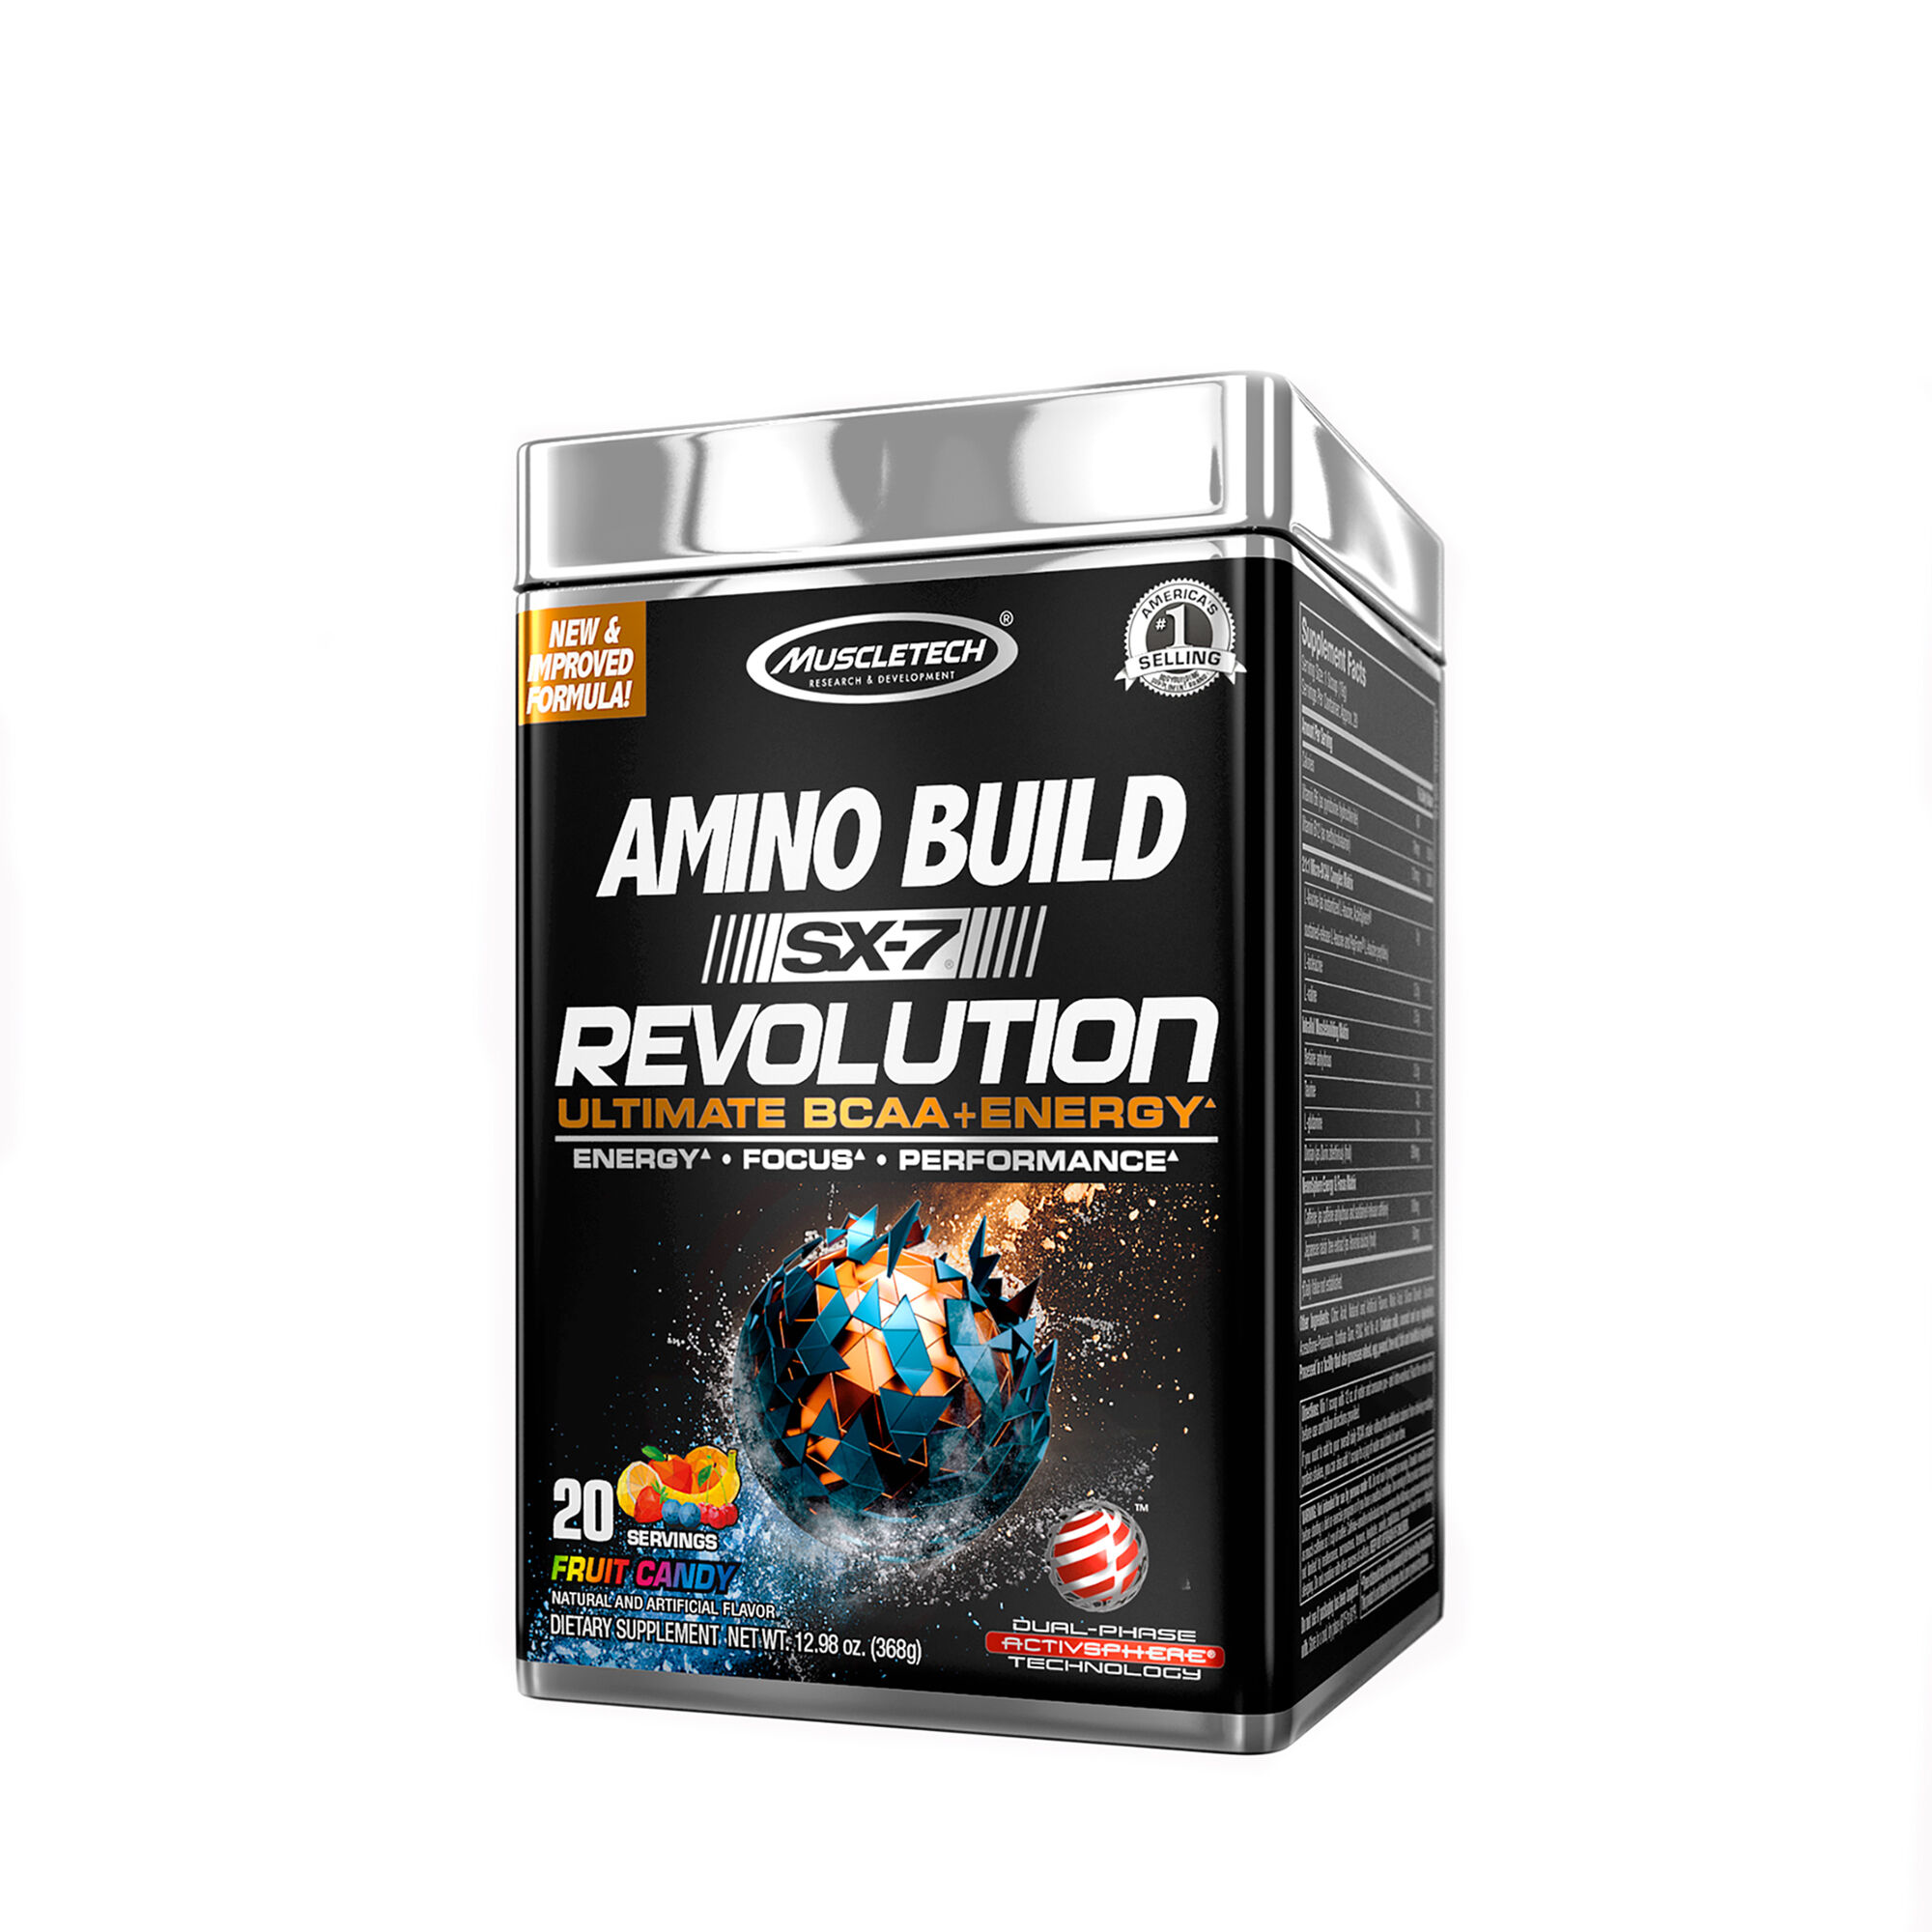 Muscletech Amino Build Sx 7 Revolution Fruit Candy Gnc